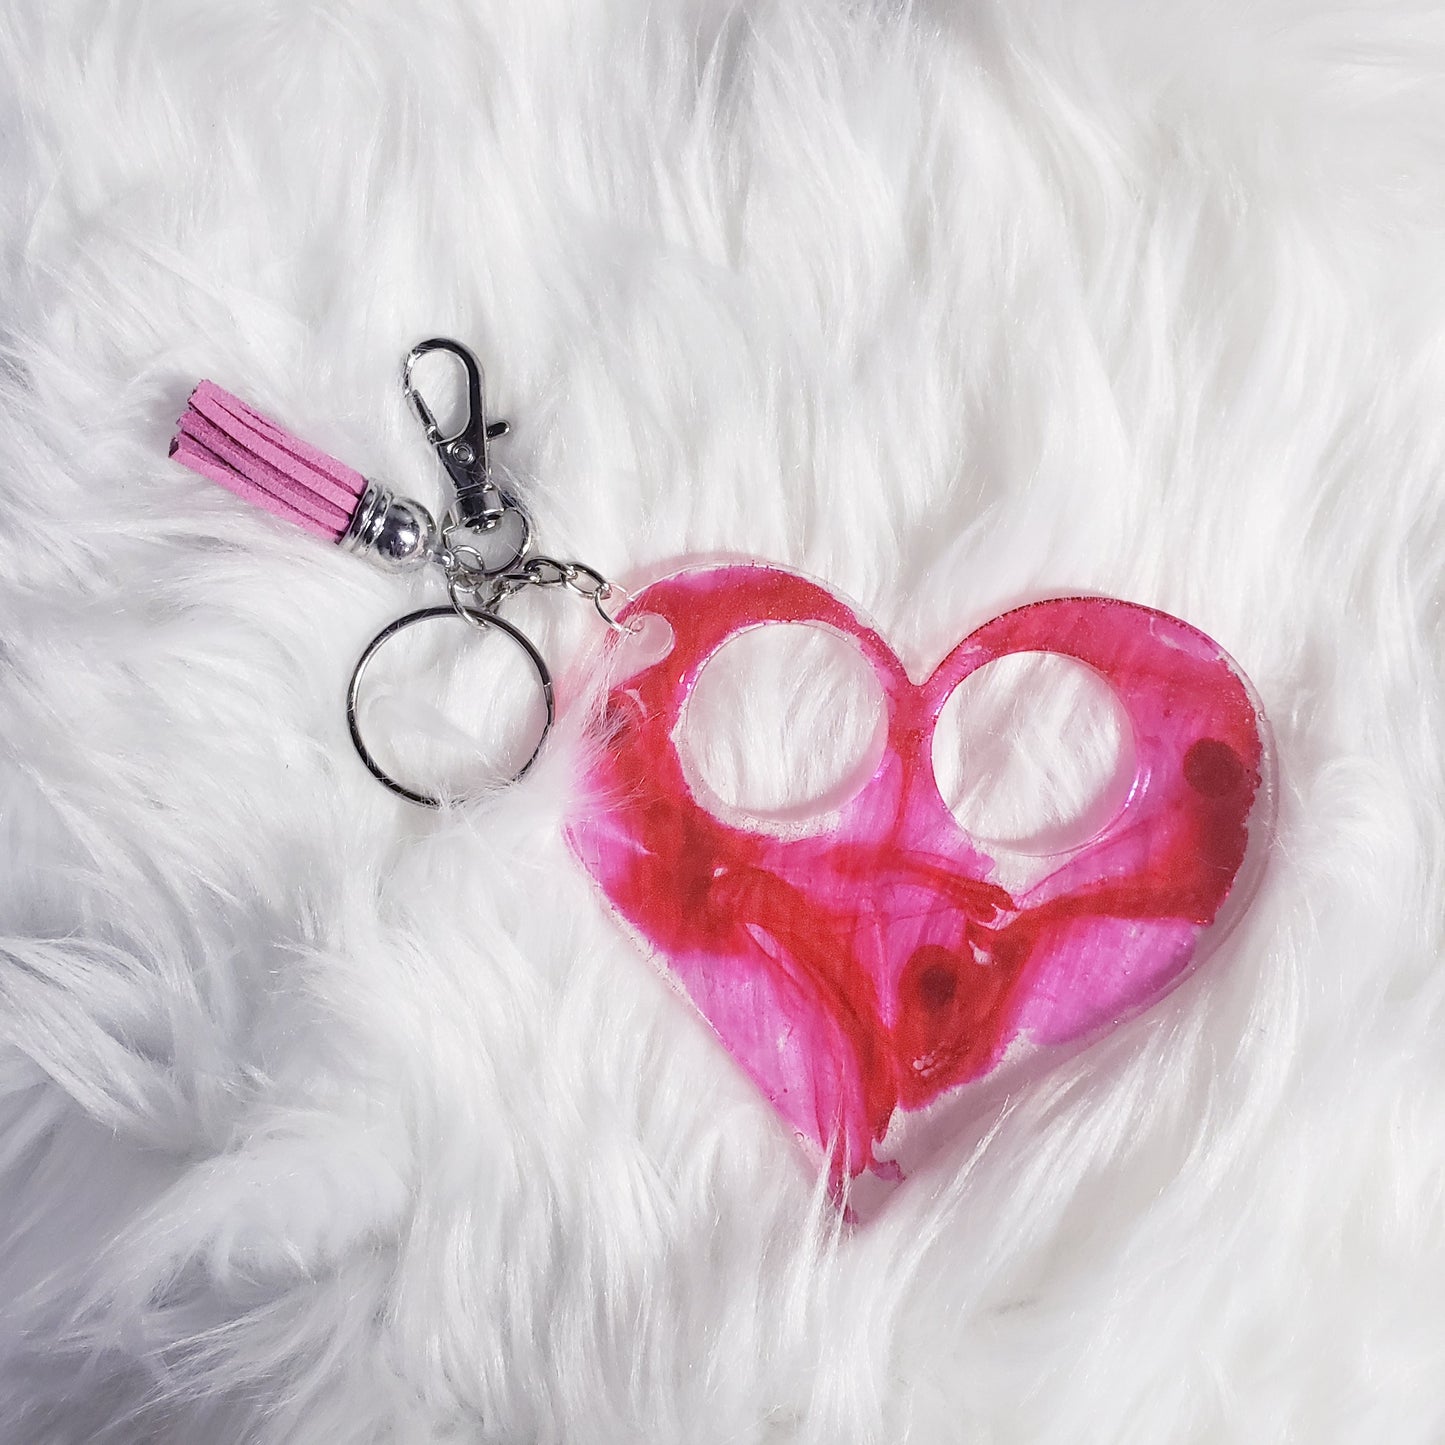 Heart Shaped Keychain